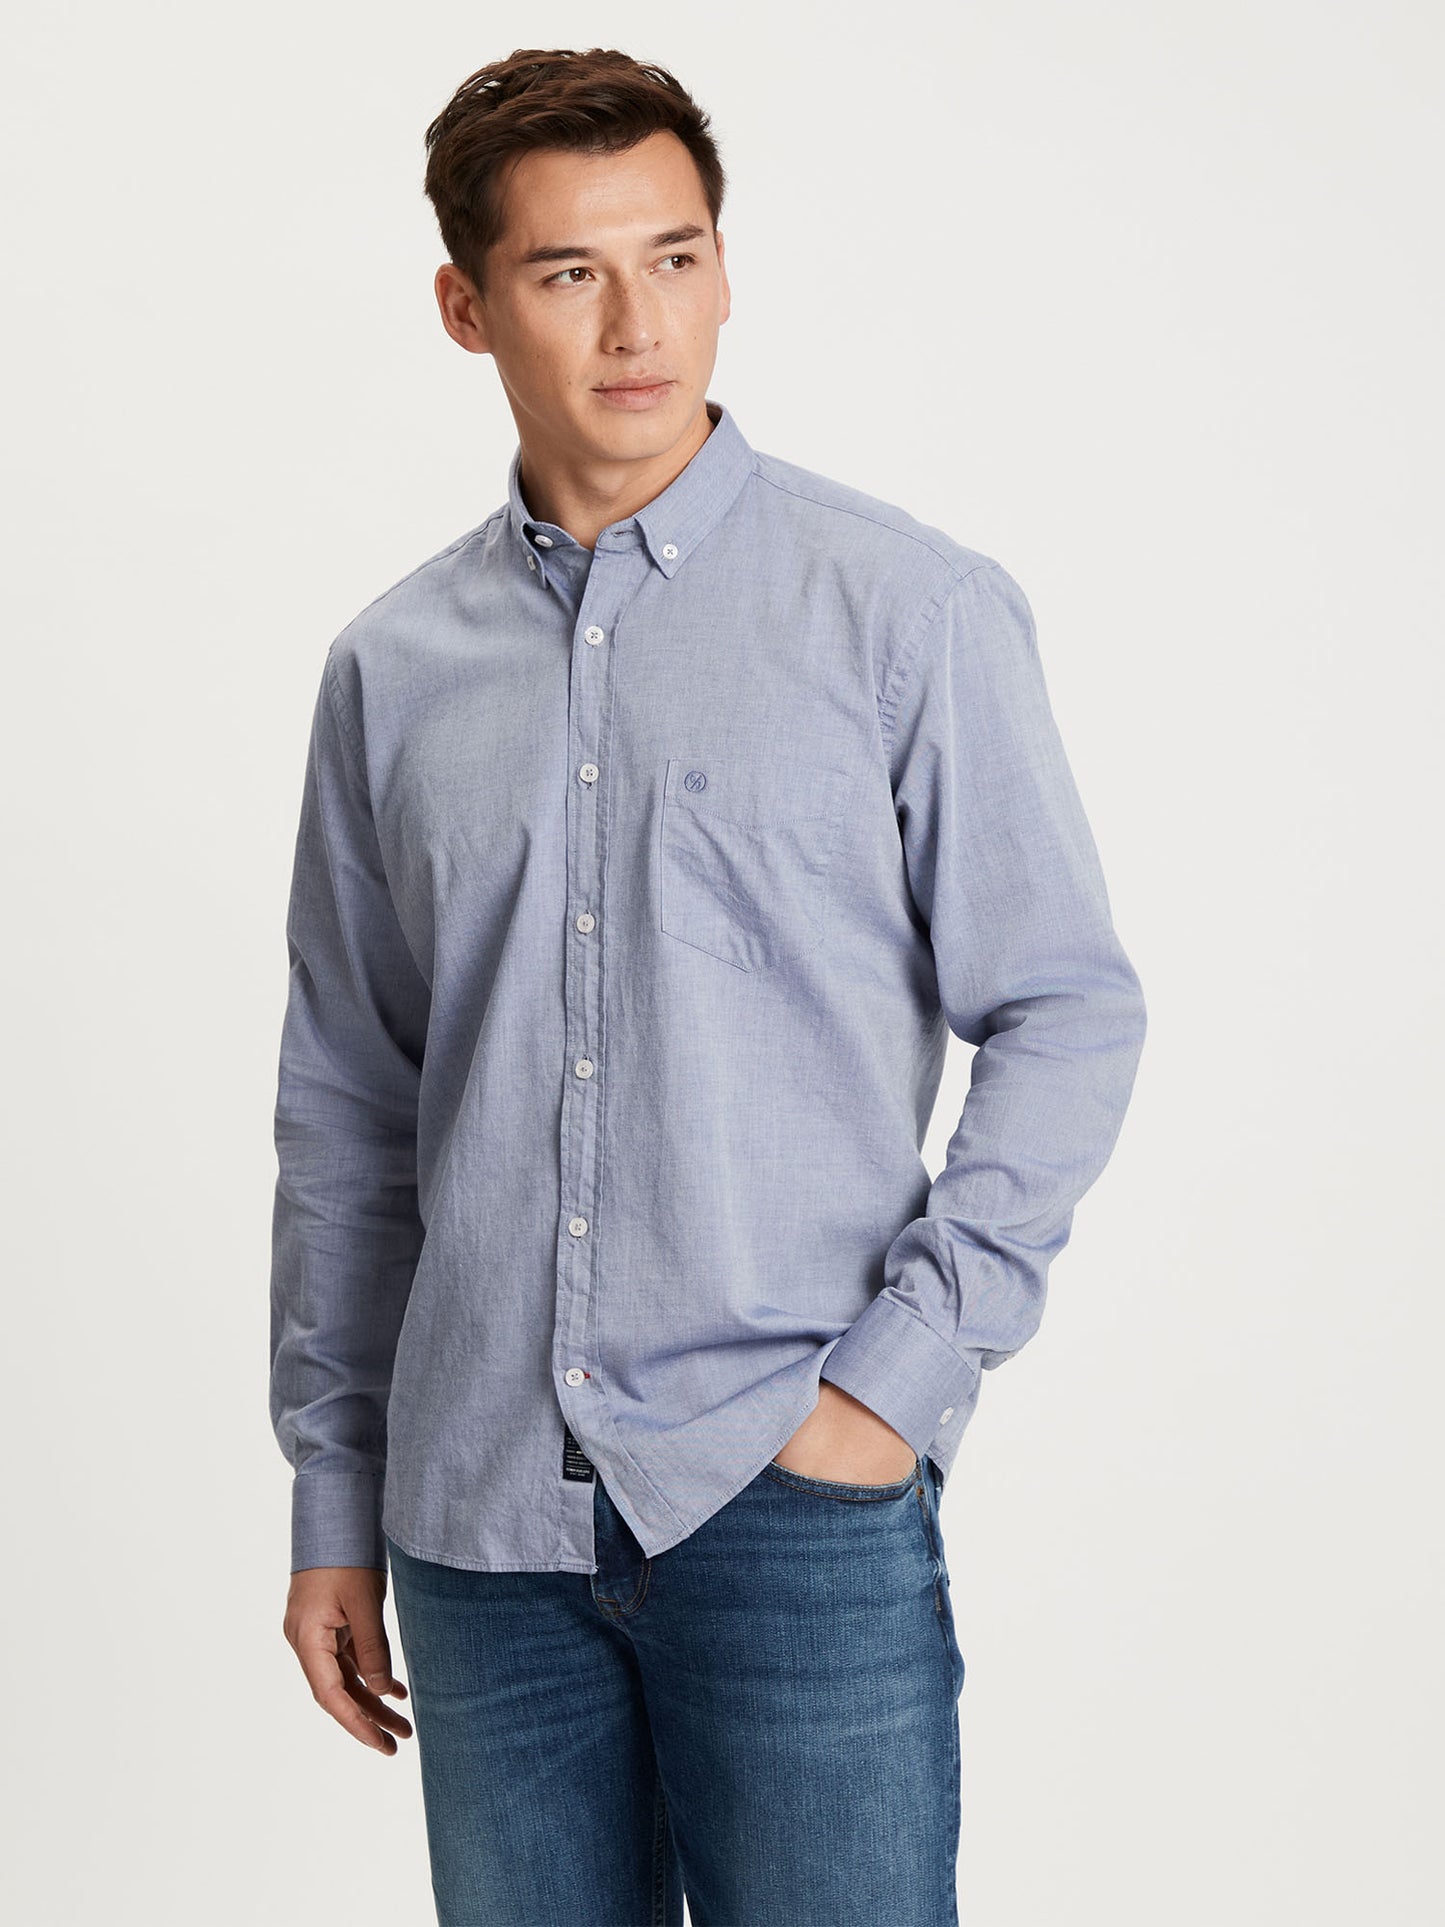 Men's regular long-sleeved shirt with breast pocket, blue.